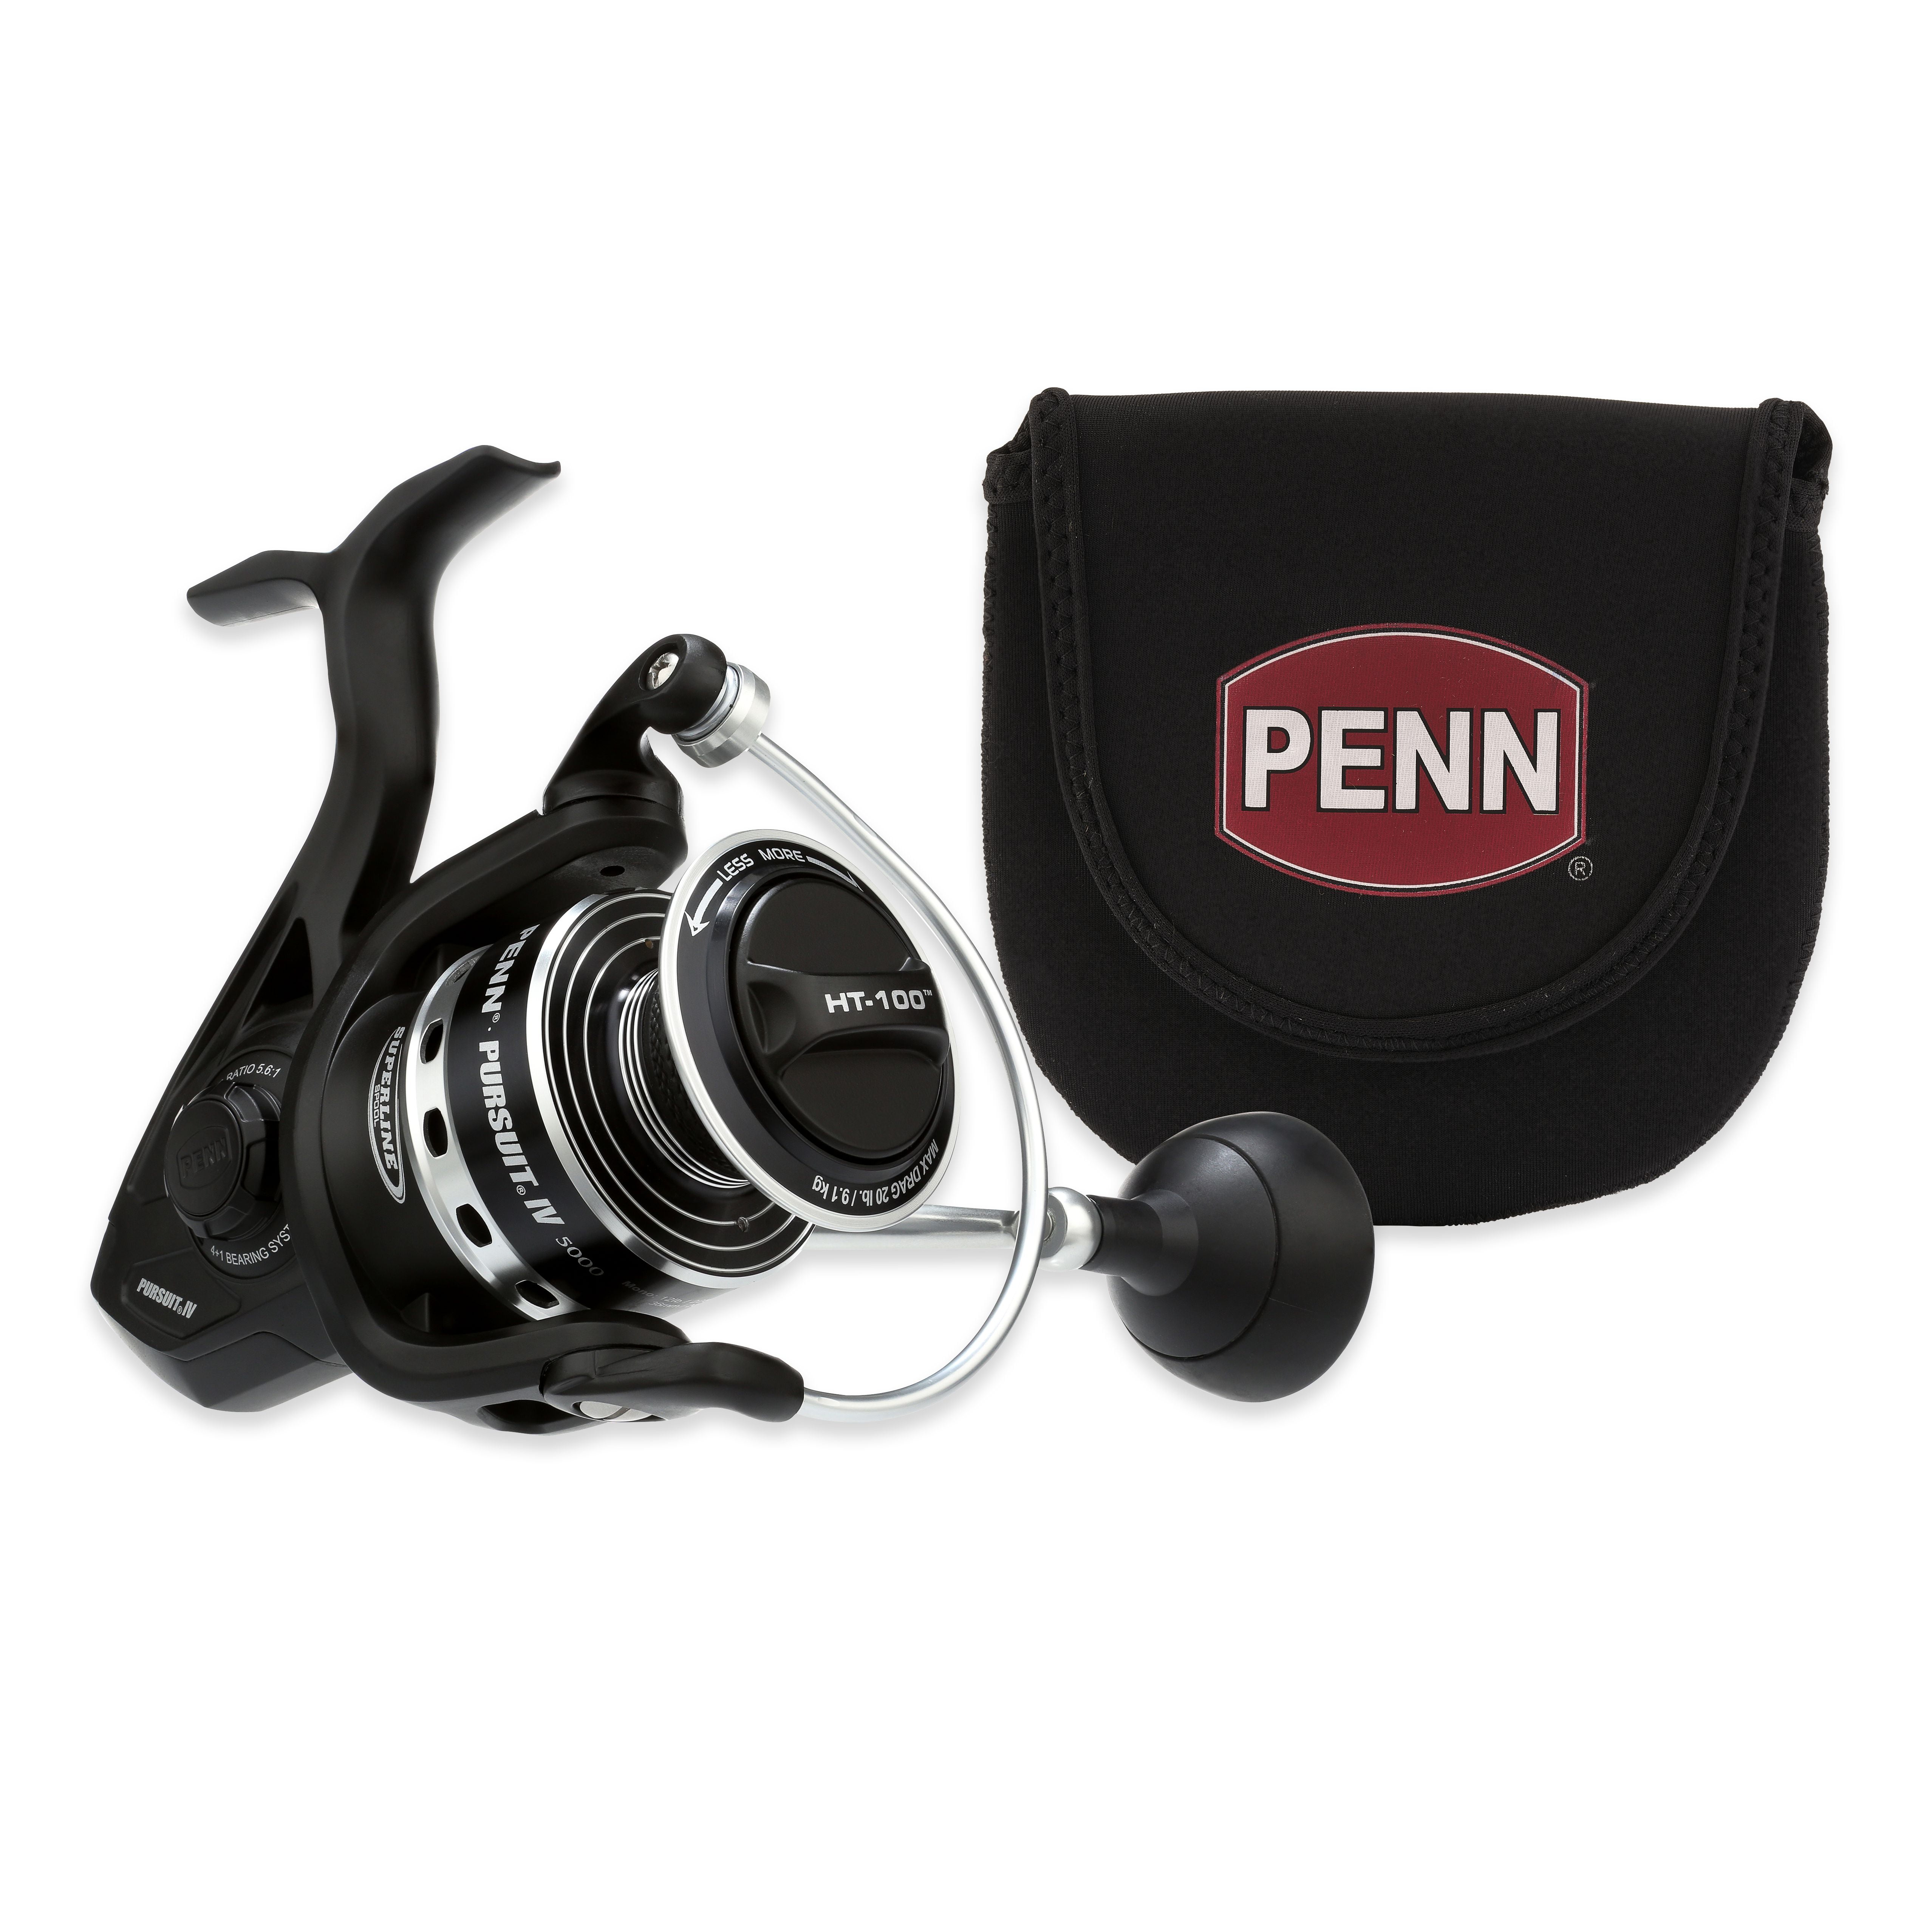 NEW Penn Pursuit IV 4000 Spinning Reel 6.2:1 Gear Ratio - Black